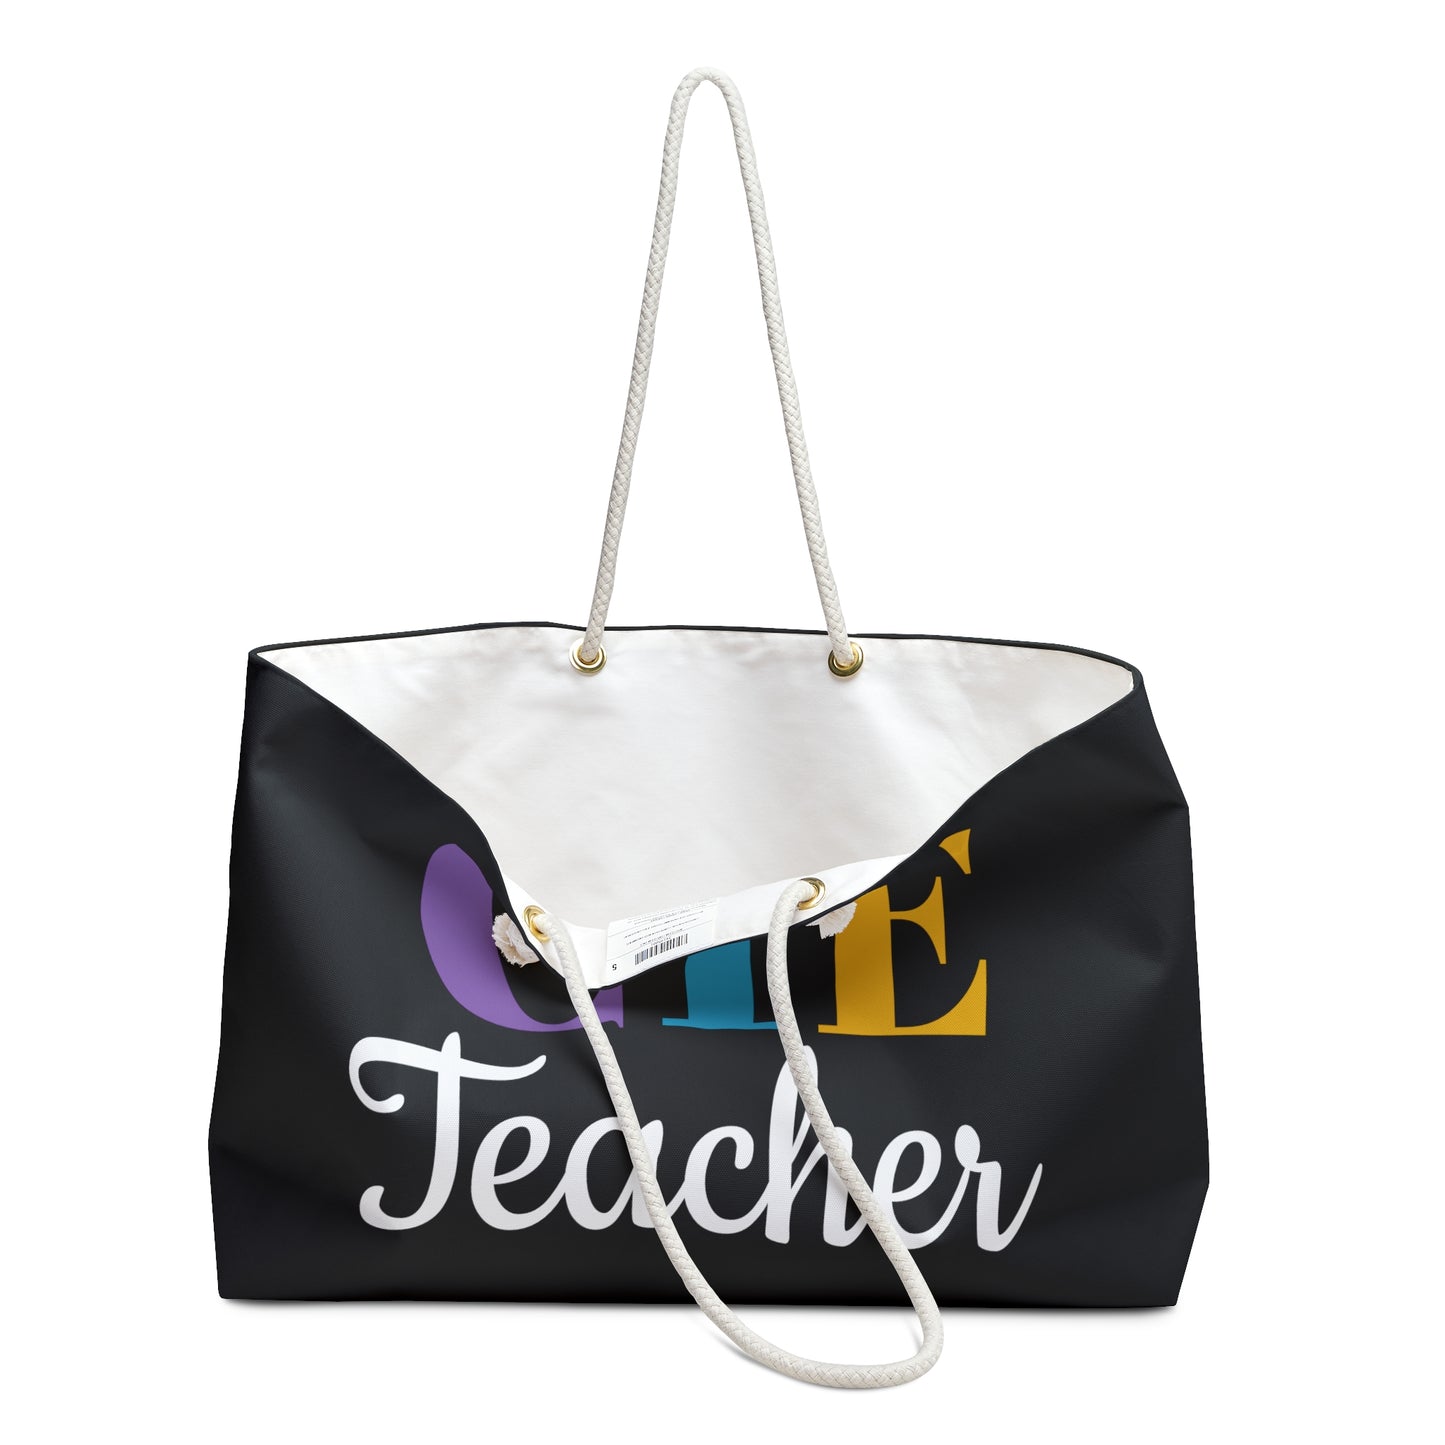 Educator/ CTE Dear Student/ Weekender Bag)